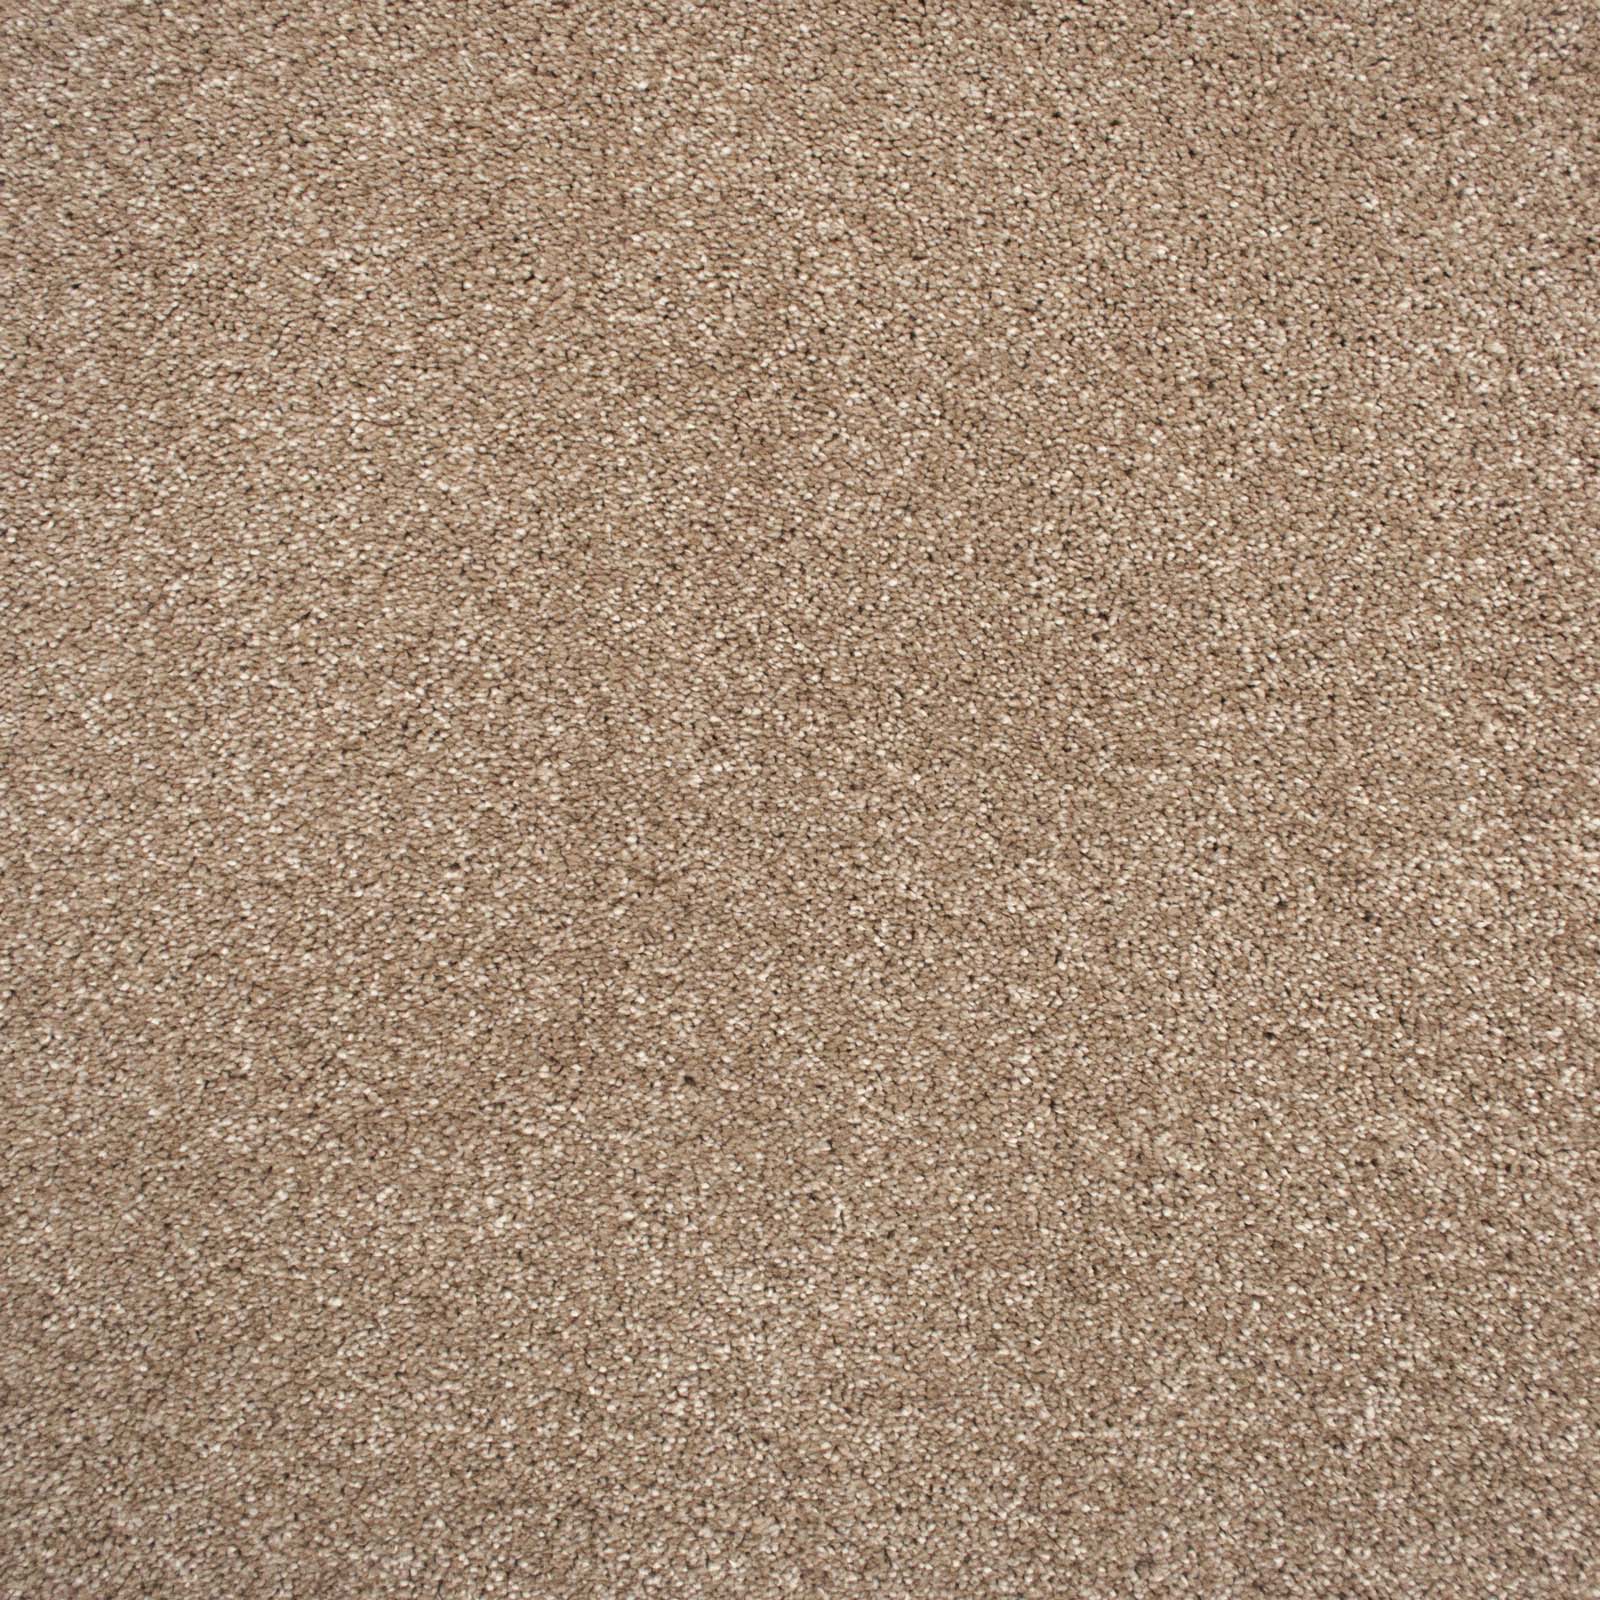 Warm Beige Soft Supreme Felt Back Saxony Carpet